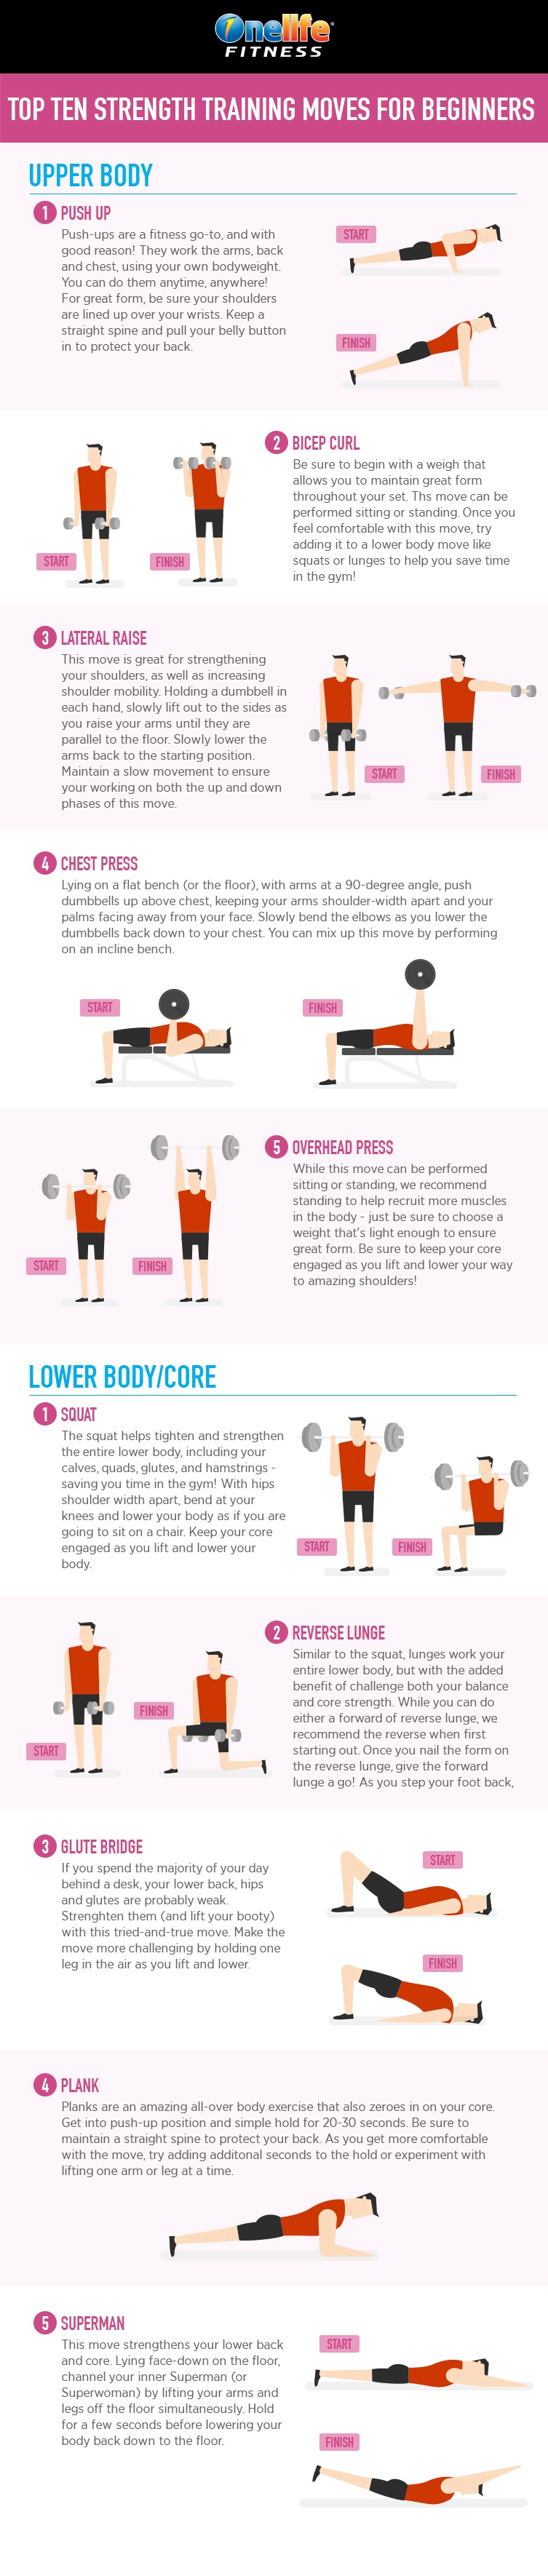 10 strength training moves